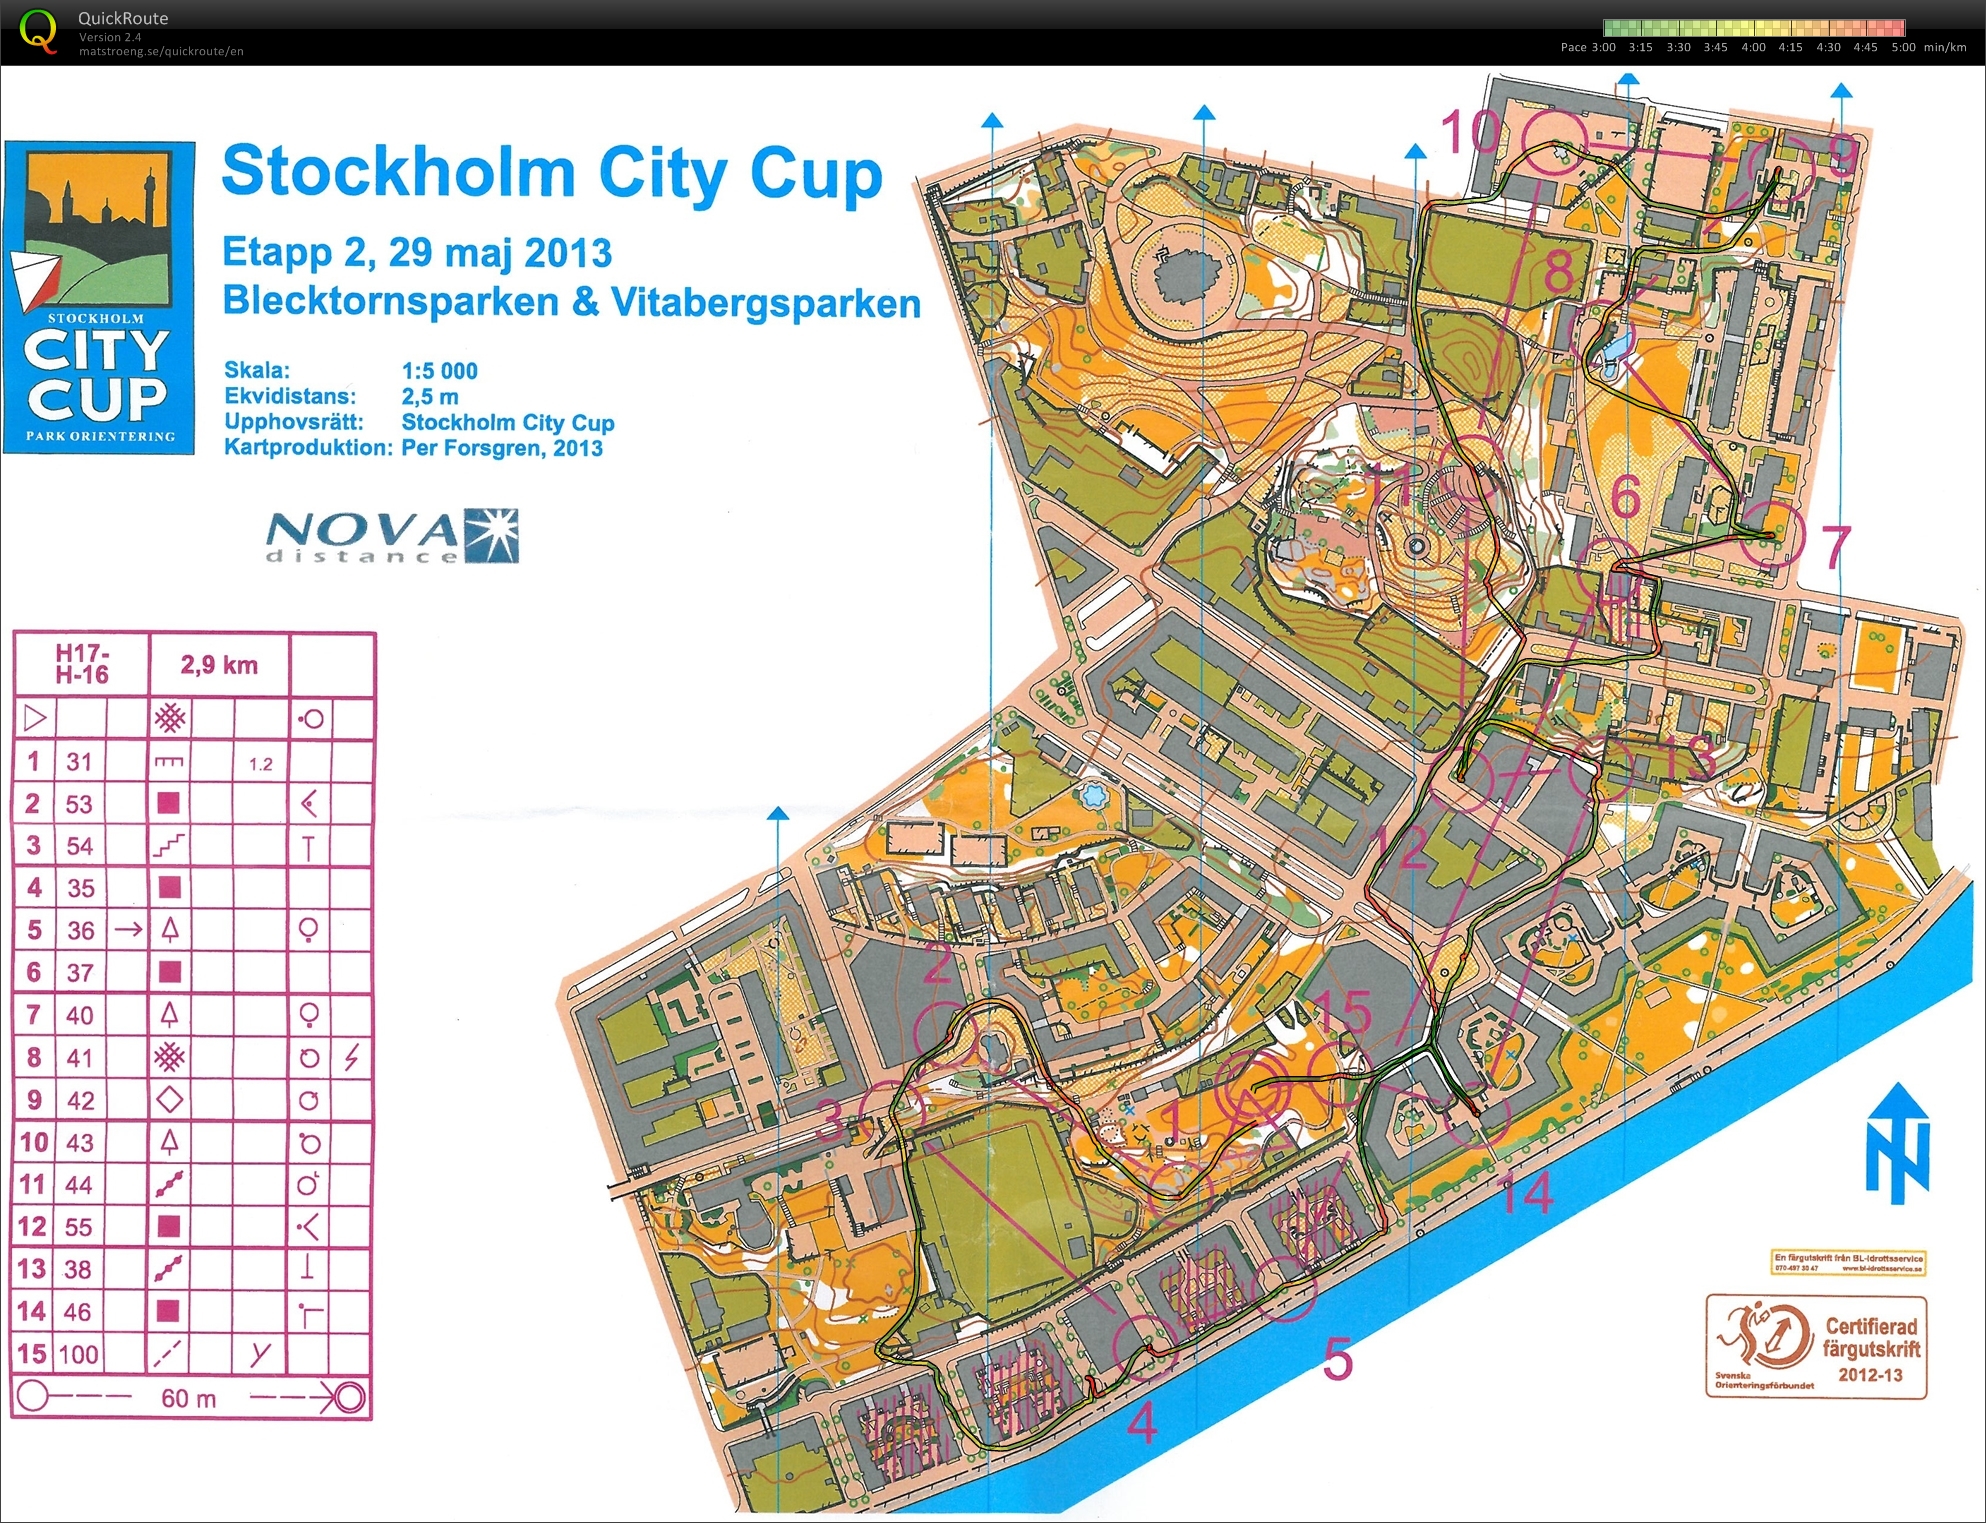 Stockholm City Cup, etapp 2 (29/05/2013)